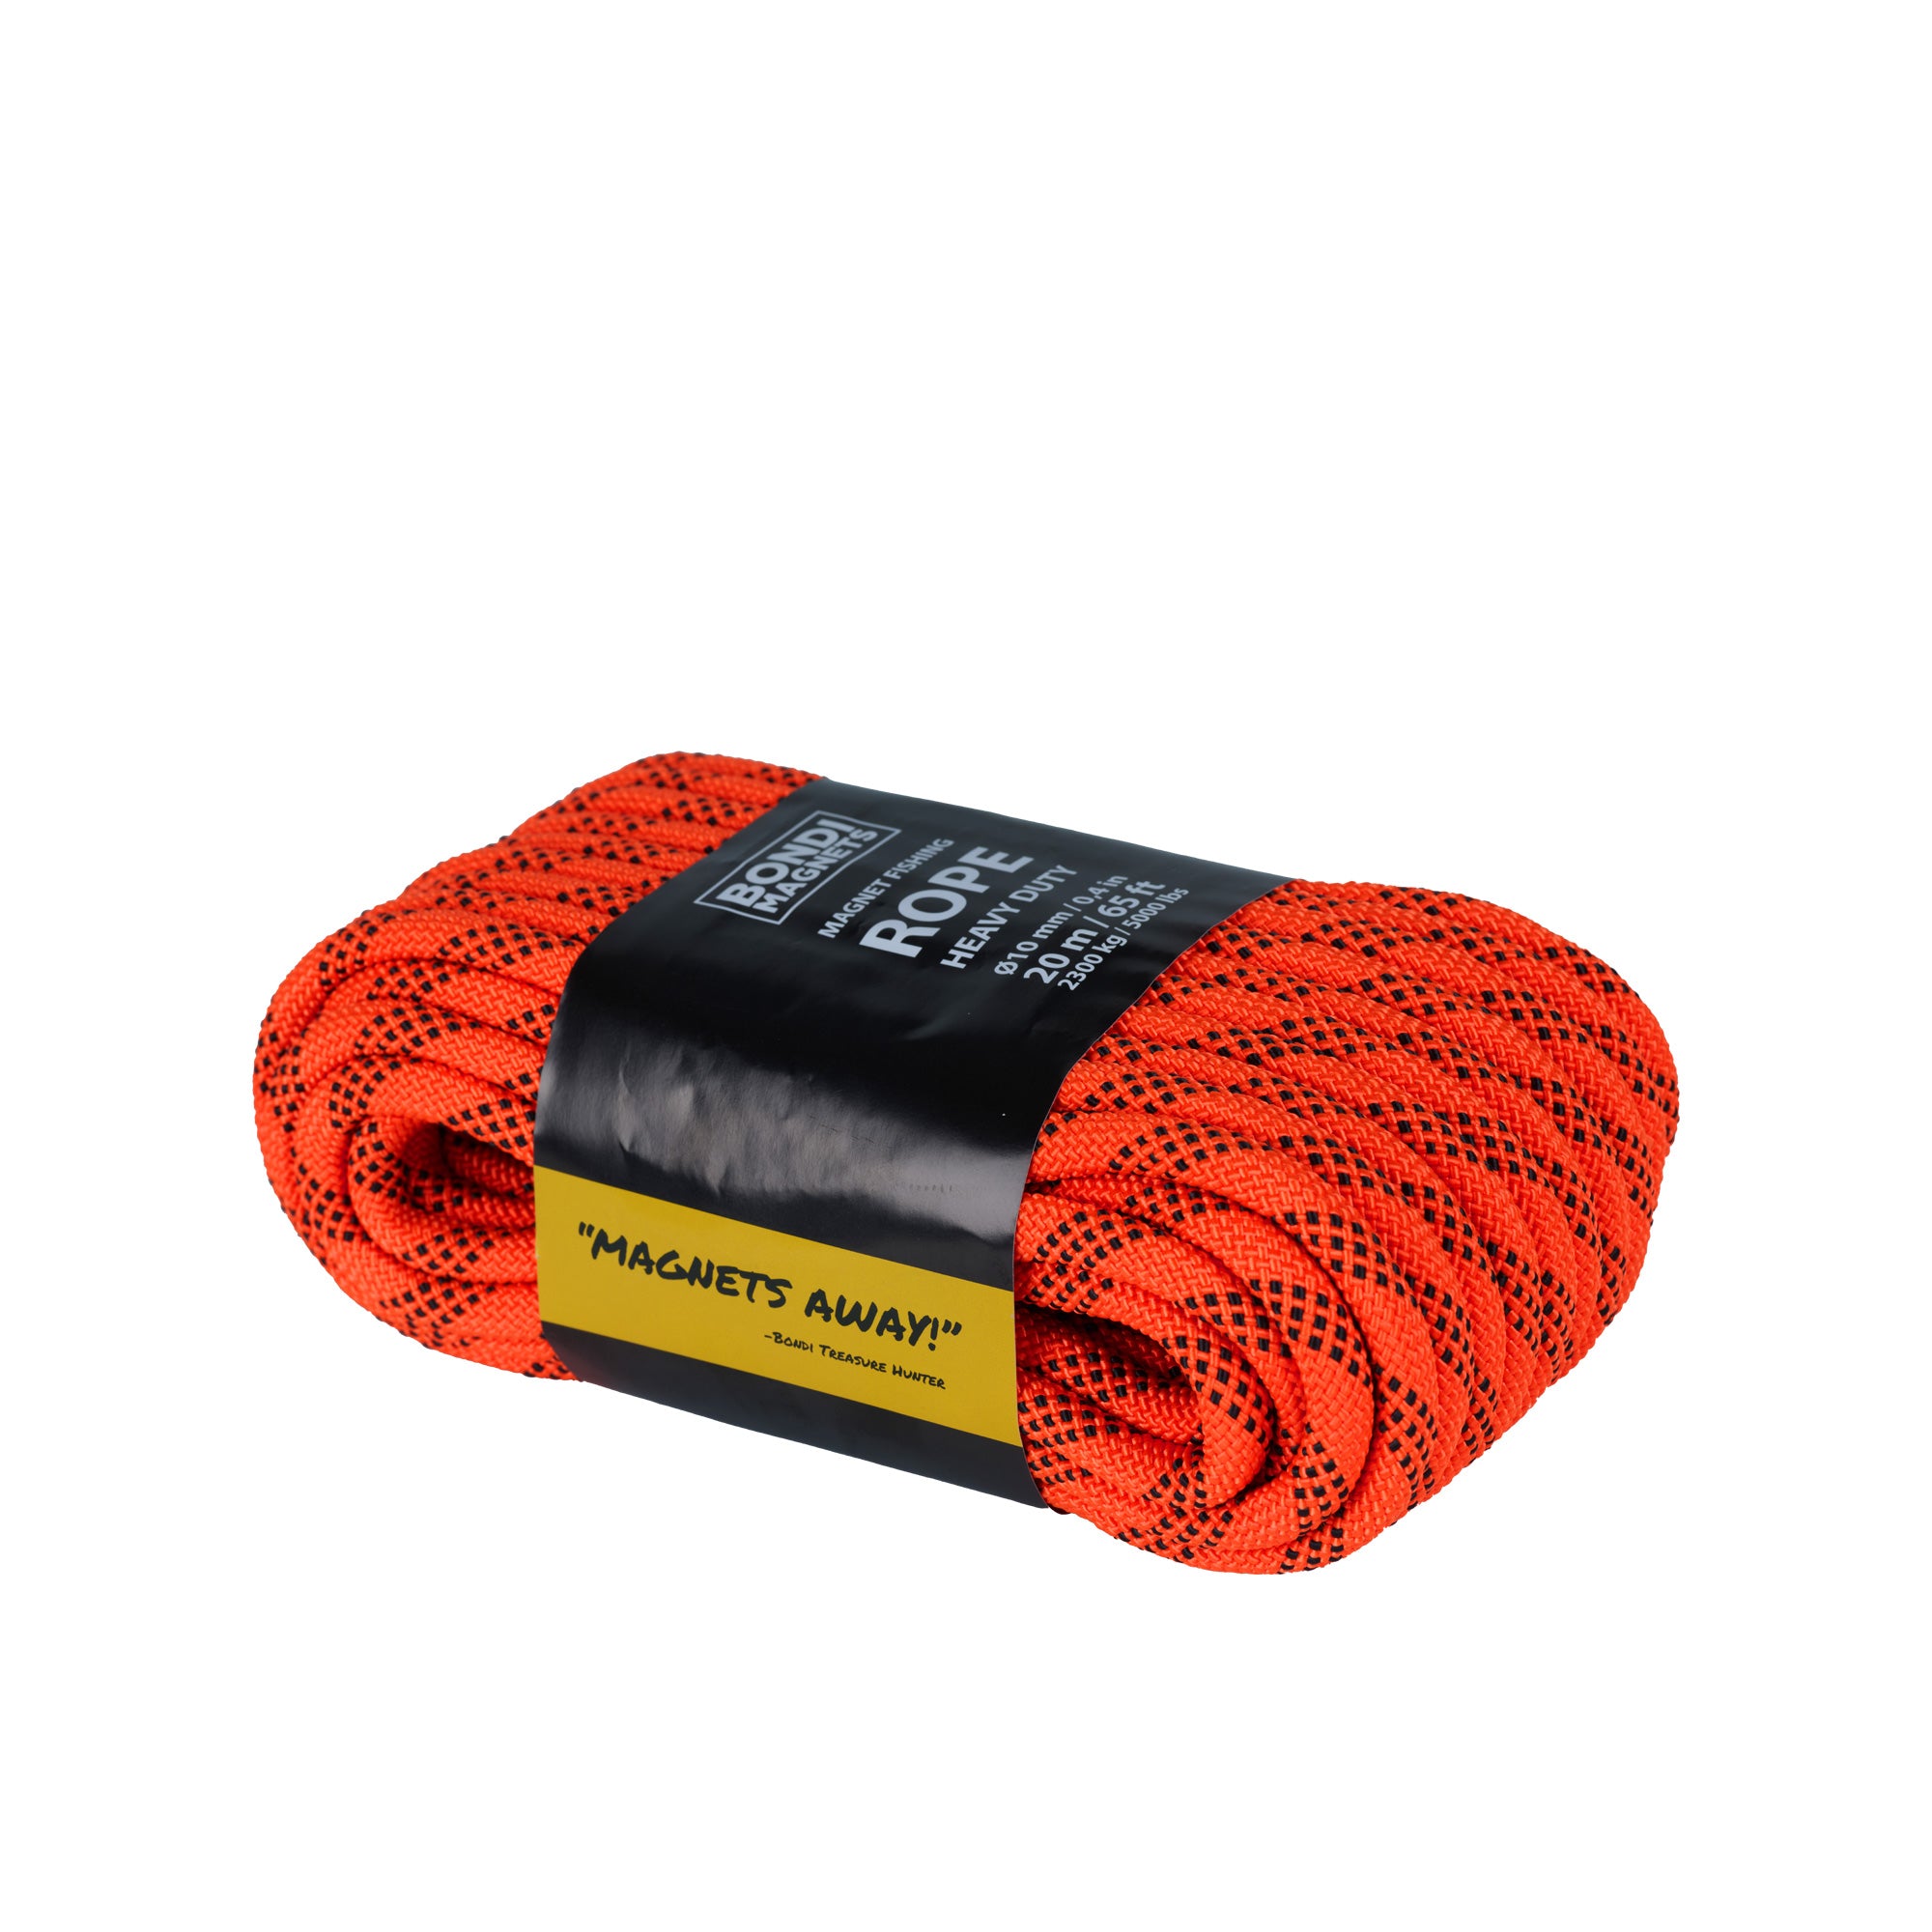 Magnet Fishing Rope with Hooks - All Purpose Nylon High Strengte Cord Rope  - 65 Feet - Diameter 6mm/8mm - Approximately 1/4 / 1/3 (Black, Diameter